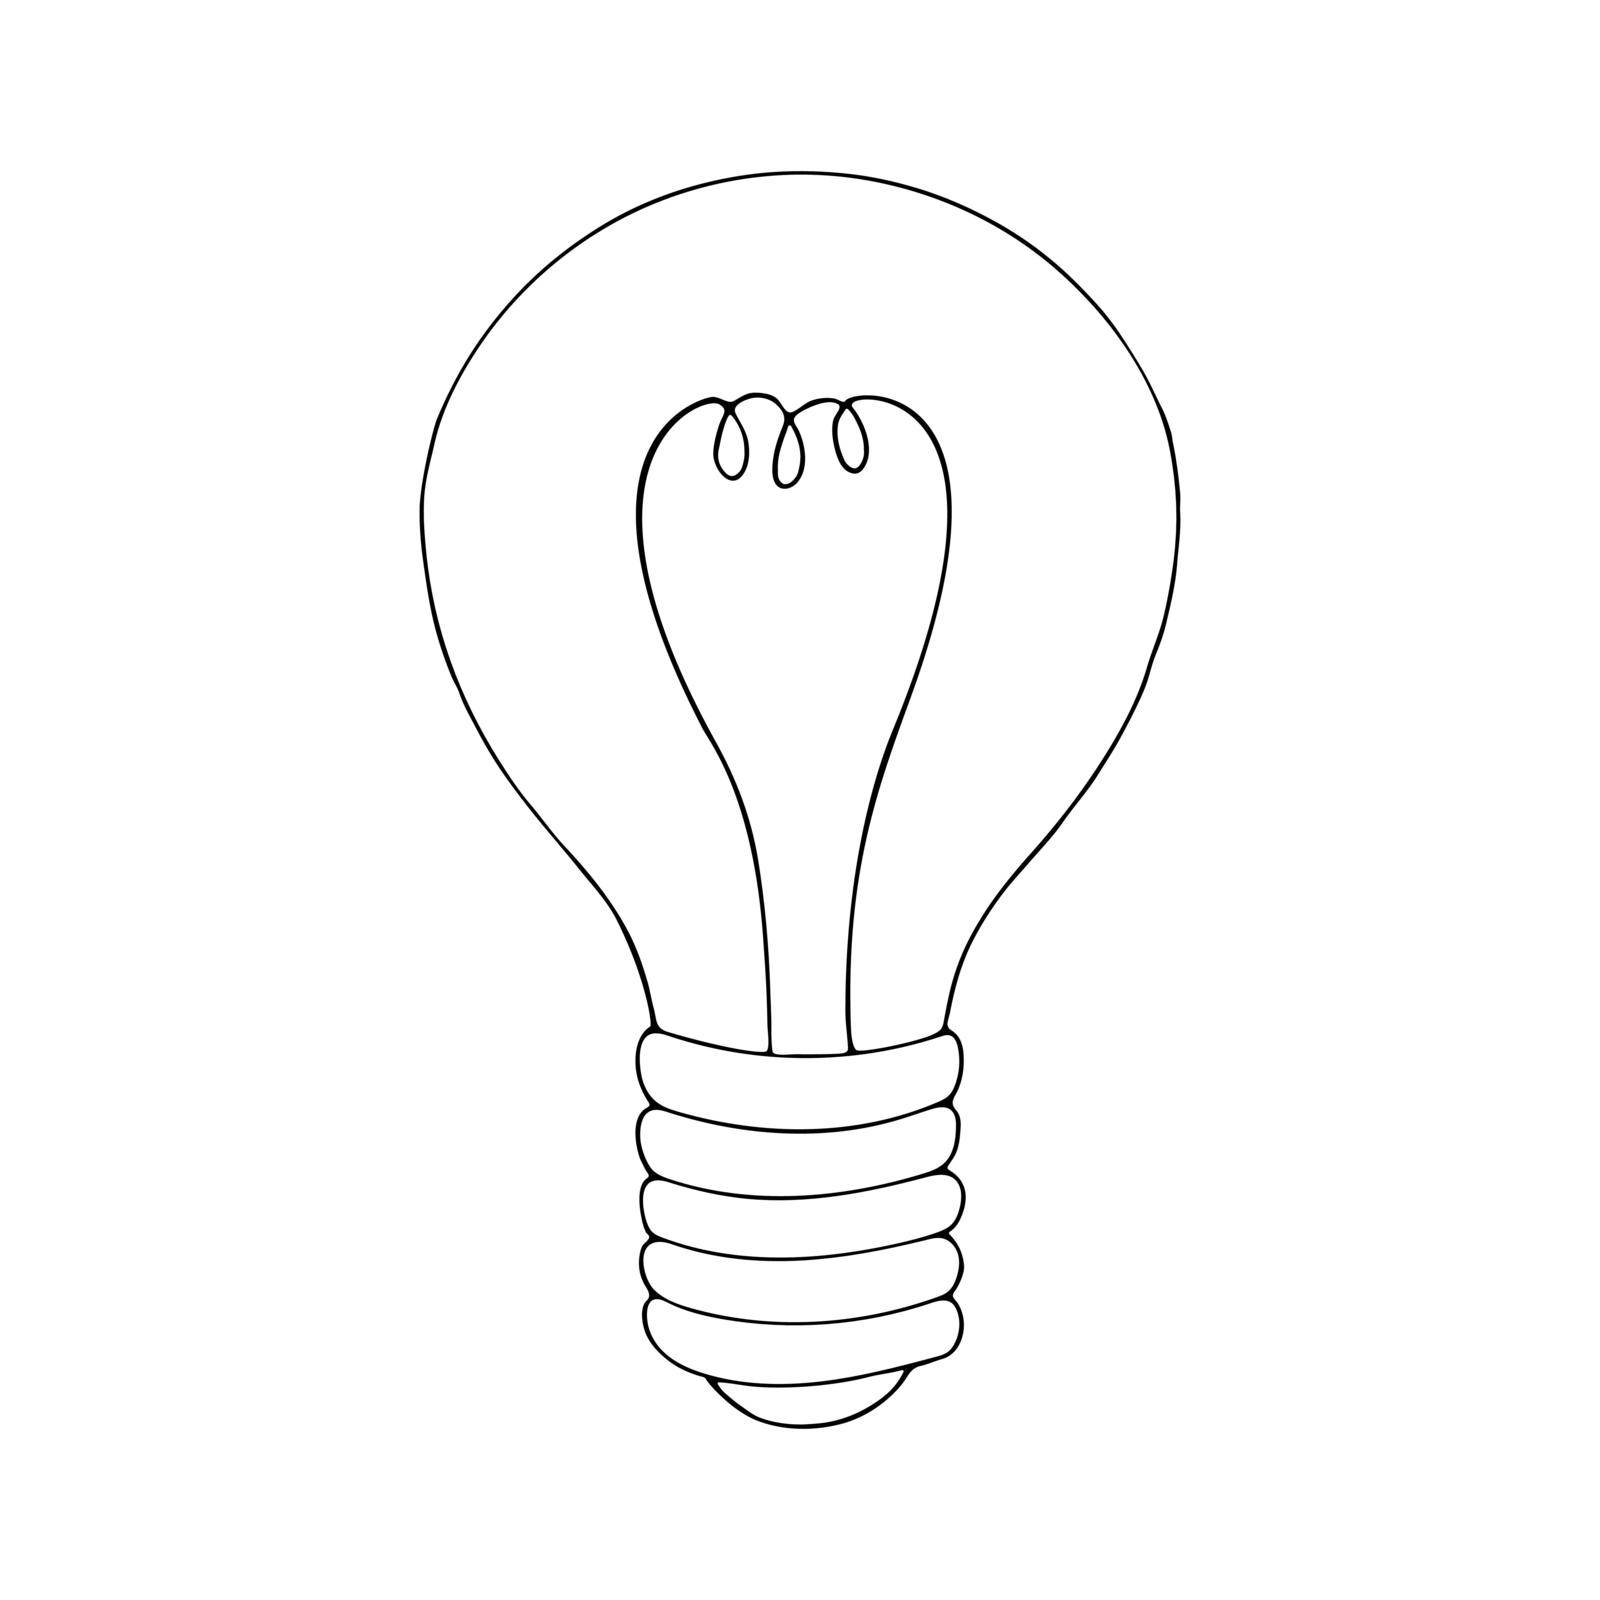 Edison light bulb coloring book line art. Lighting fixture, glass incandescent bulb. Hand drawn vector black and white illustration.